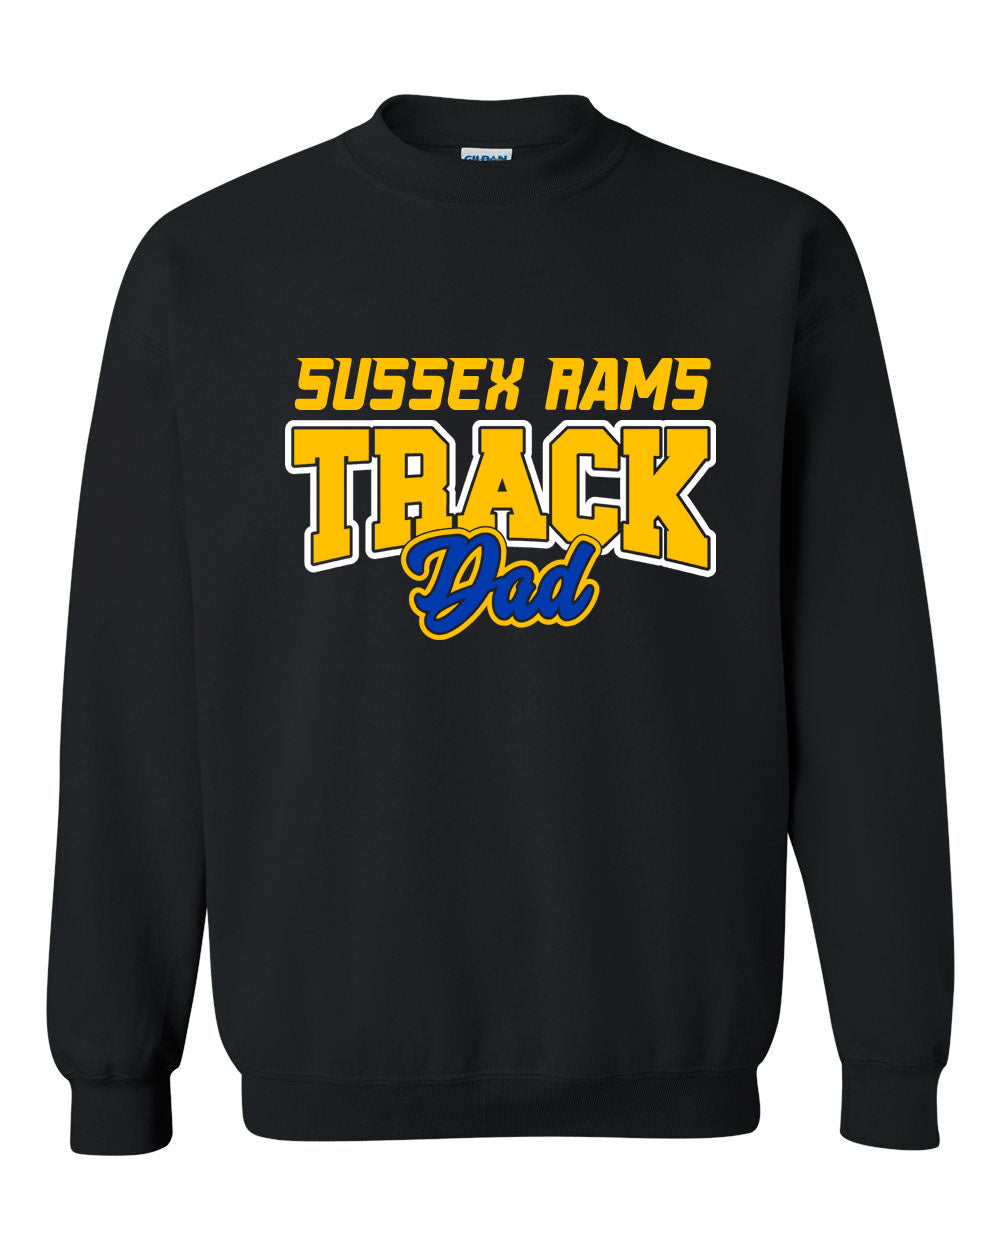 Sussex Rams Track non hooded sweatshirt Design 1